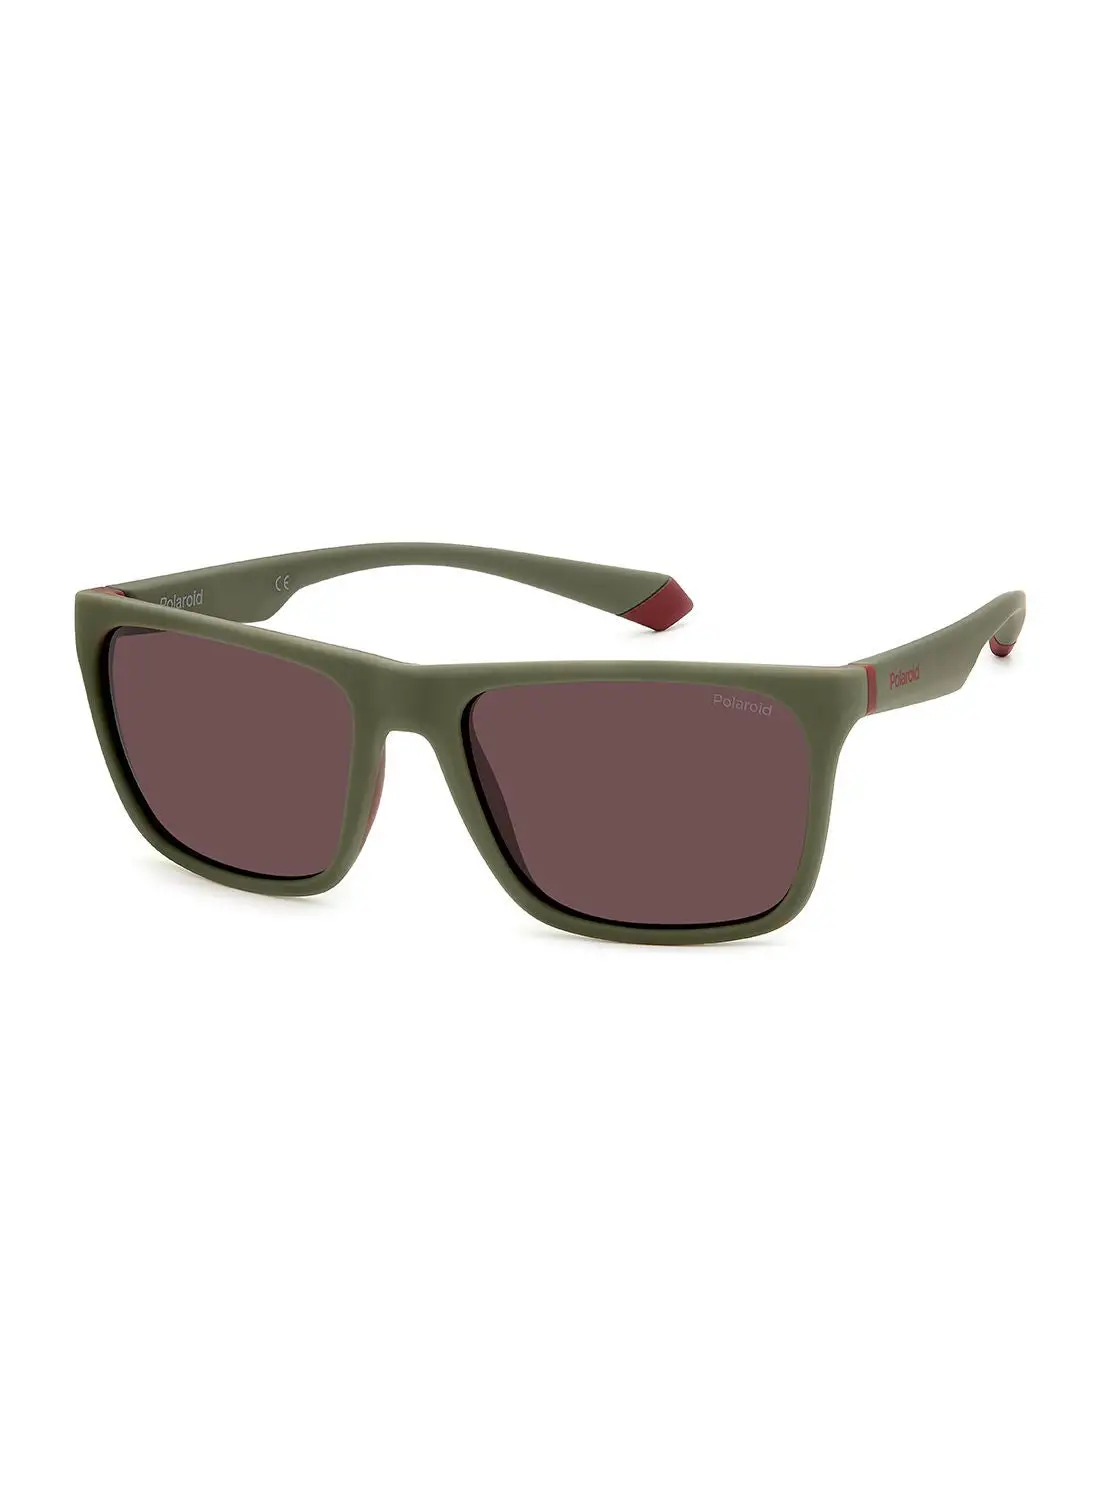 Polaroid Unisex UV Protection Square Sunglasses - Pld 2141/S Mtkhakbur 57 - Lens Size: 57 Mm